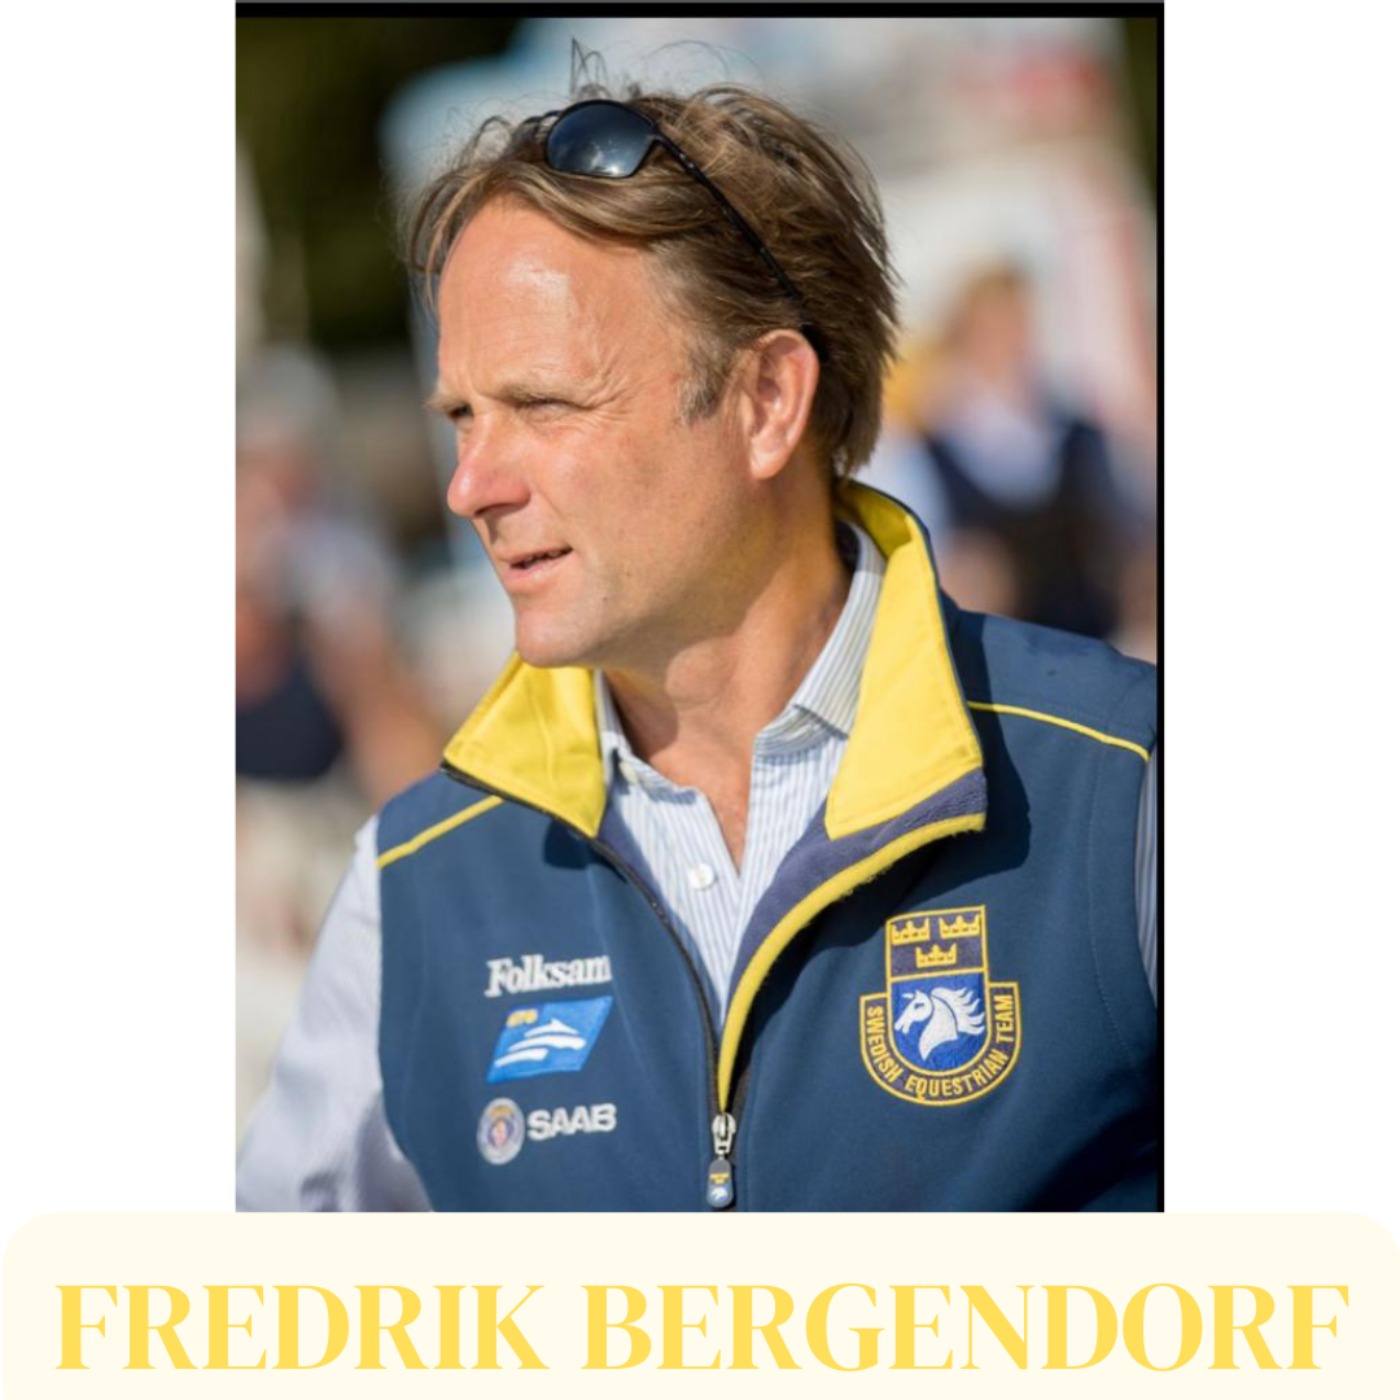 Fredrik Bergendorff